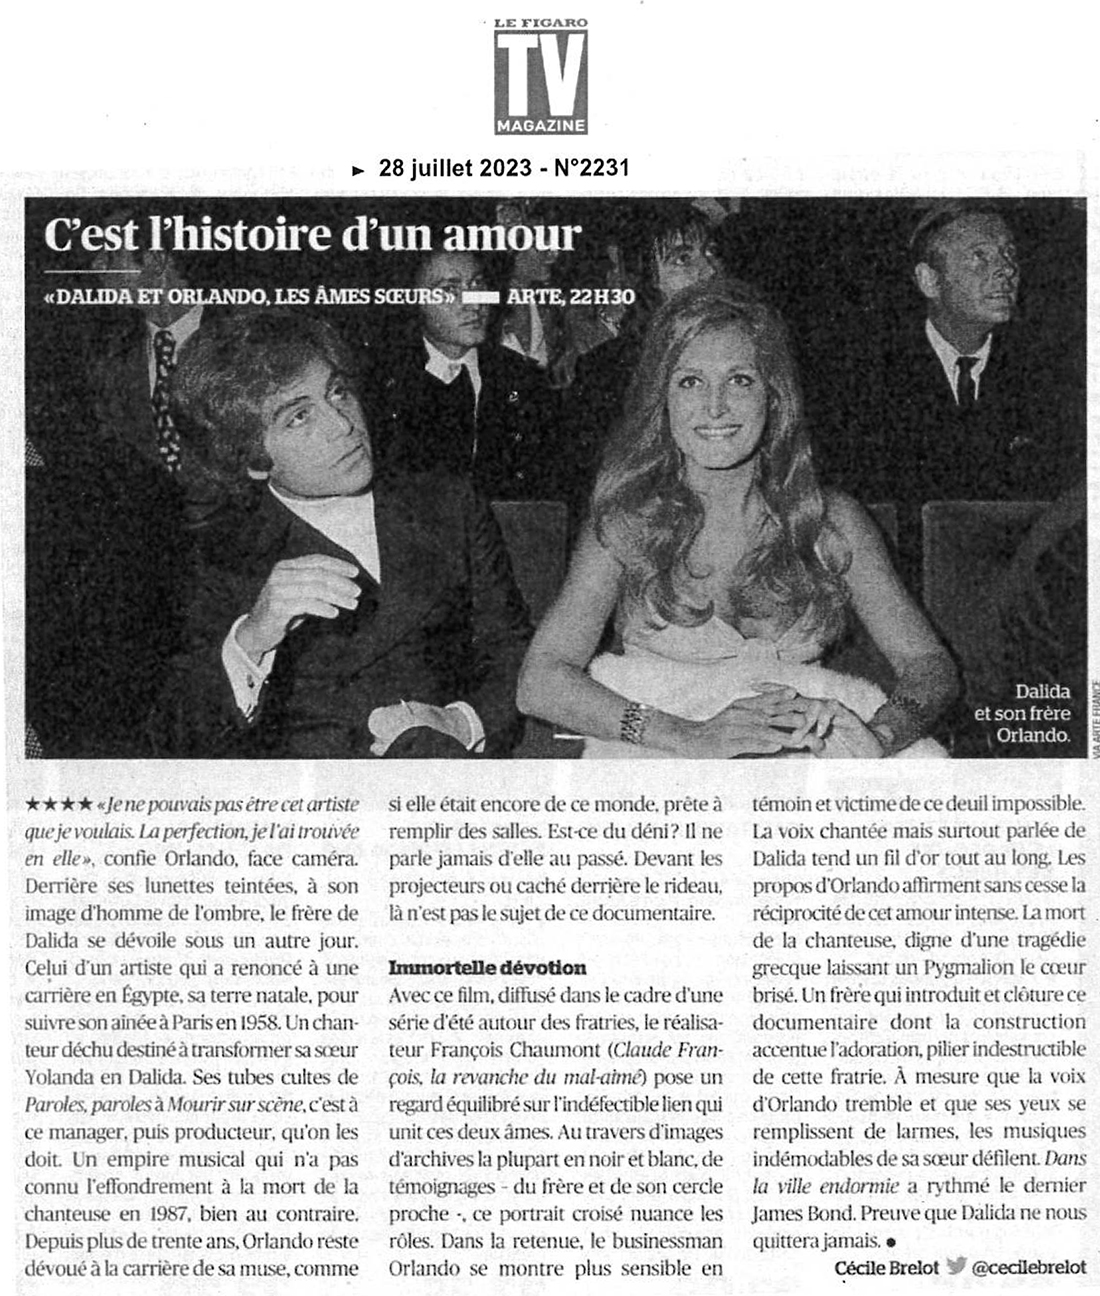 TV Magazine Dalida